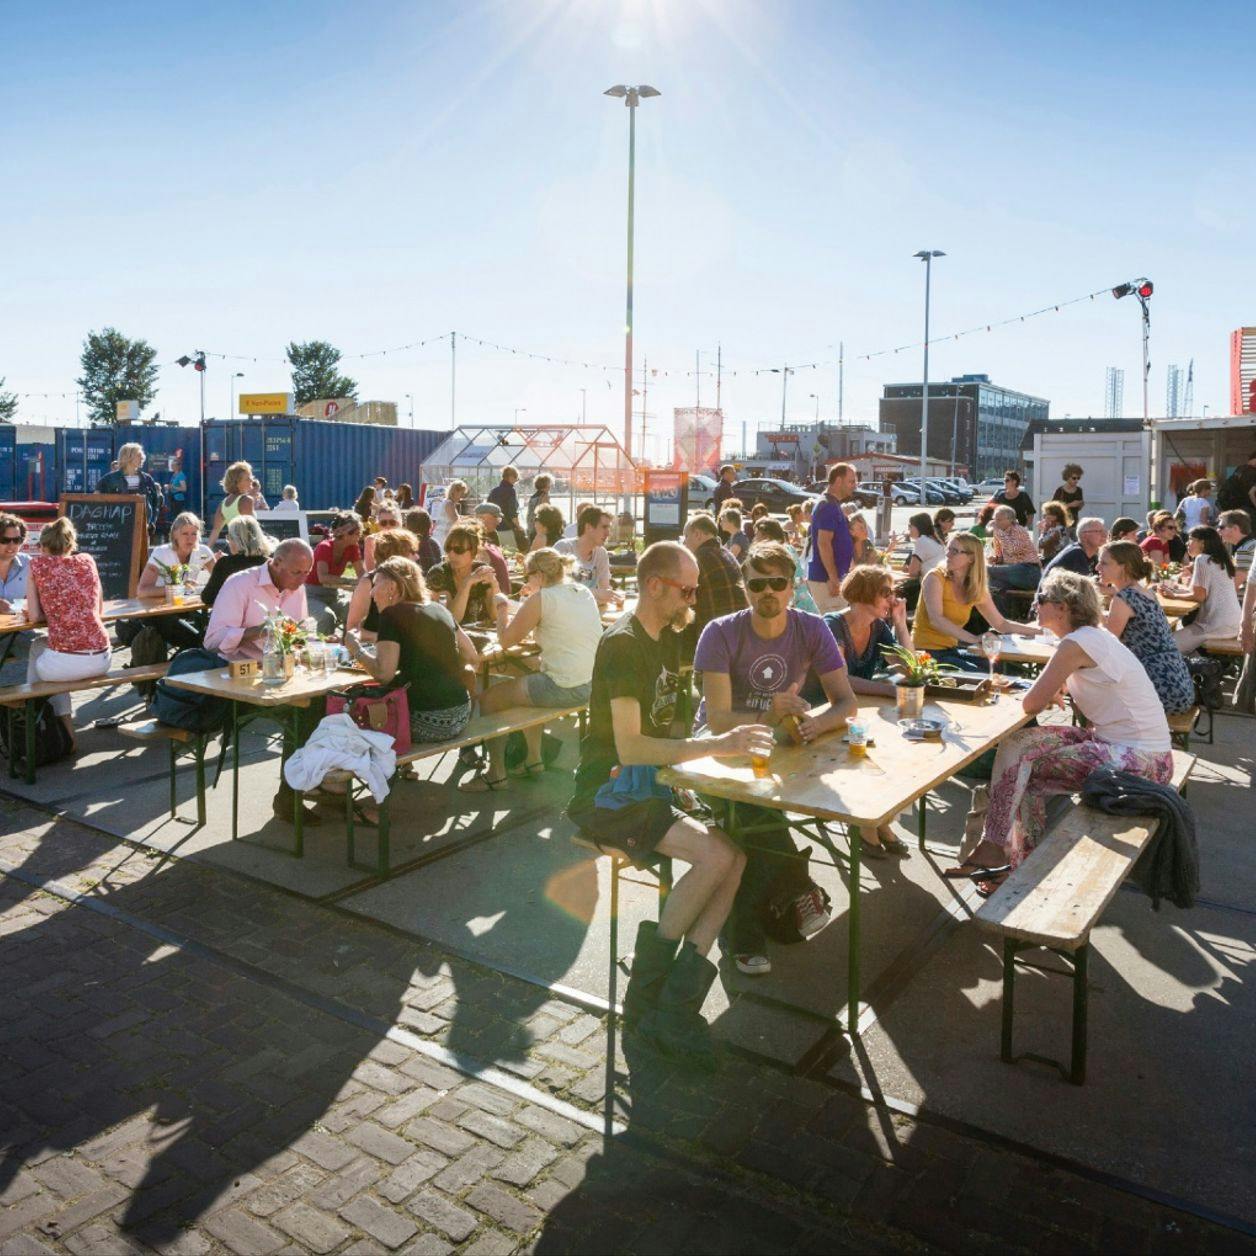 Over het IJ Festival 2019 people sitting in the food area